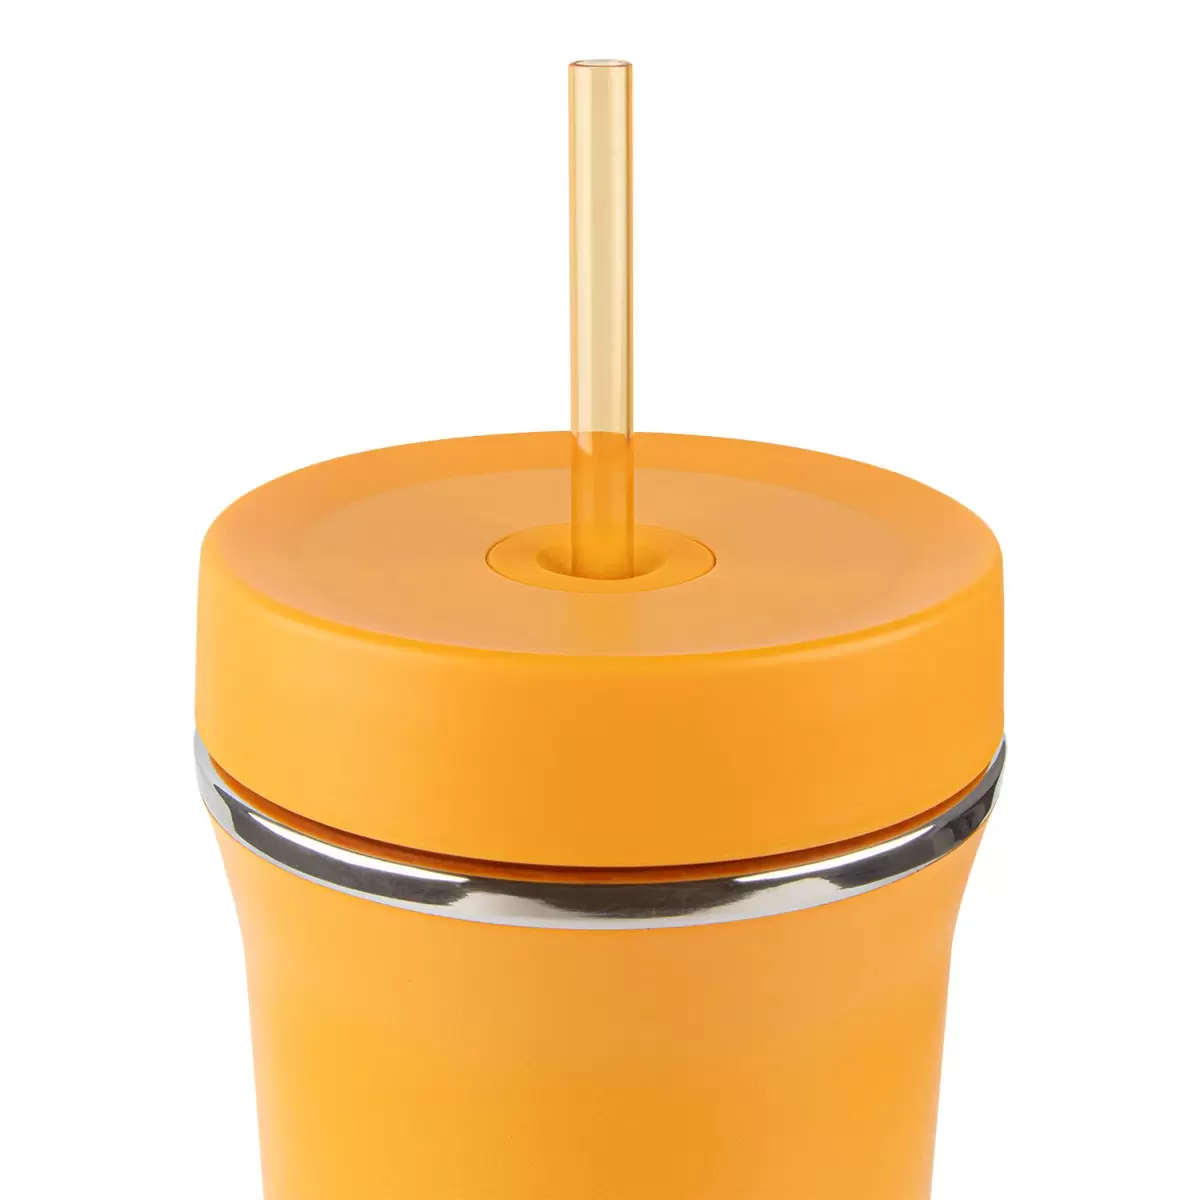 ThermoFlask 不鏽鋼吸管隨行杯附提把 950毫升 X 2件組 橘 + 粉